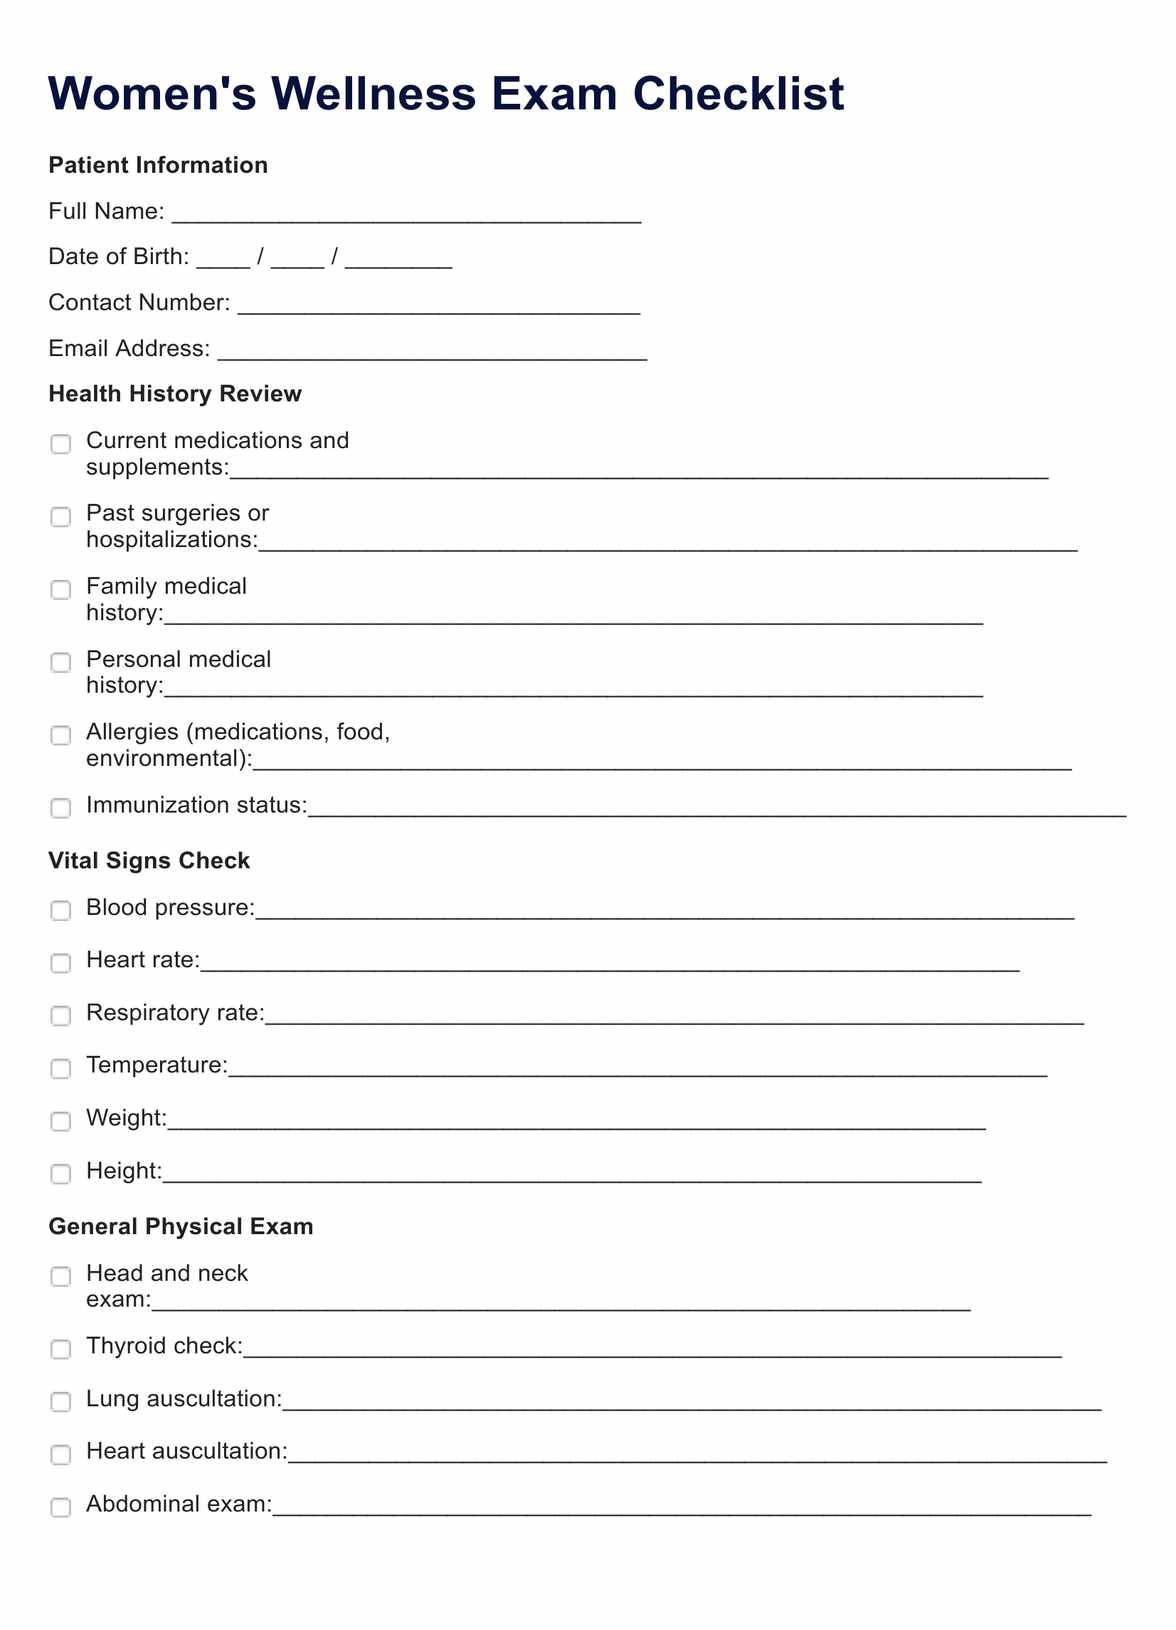 Women's Wellness Exam Checklist PDF Example